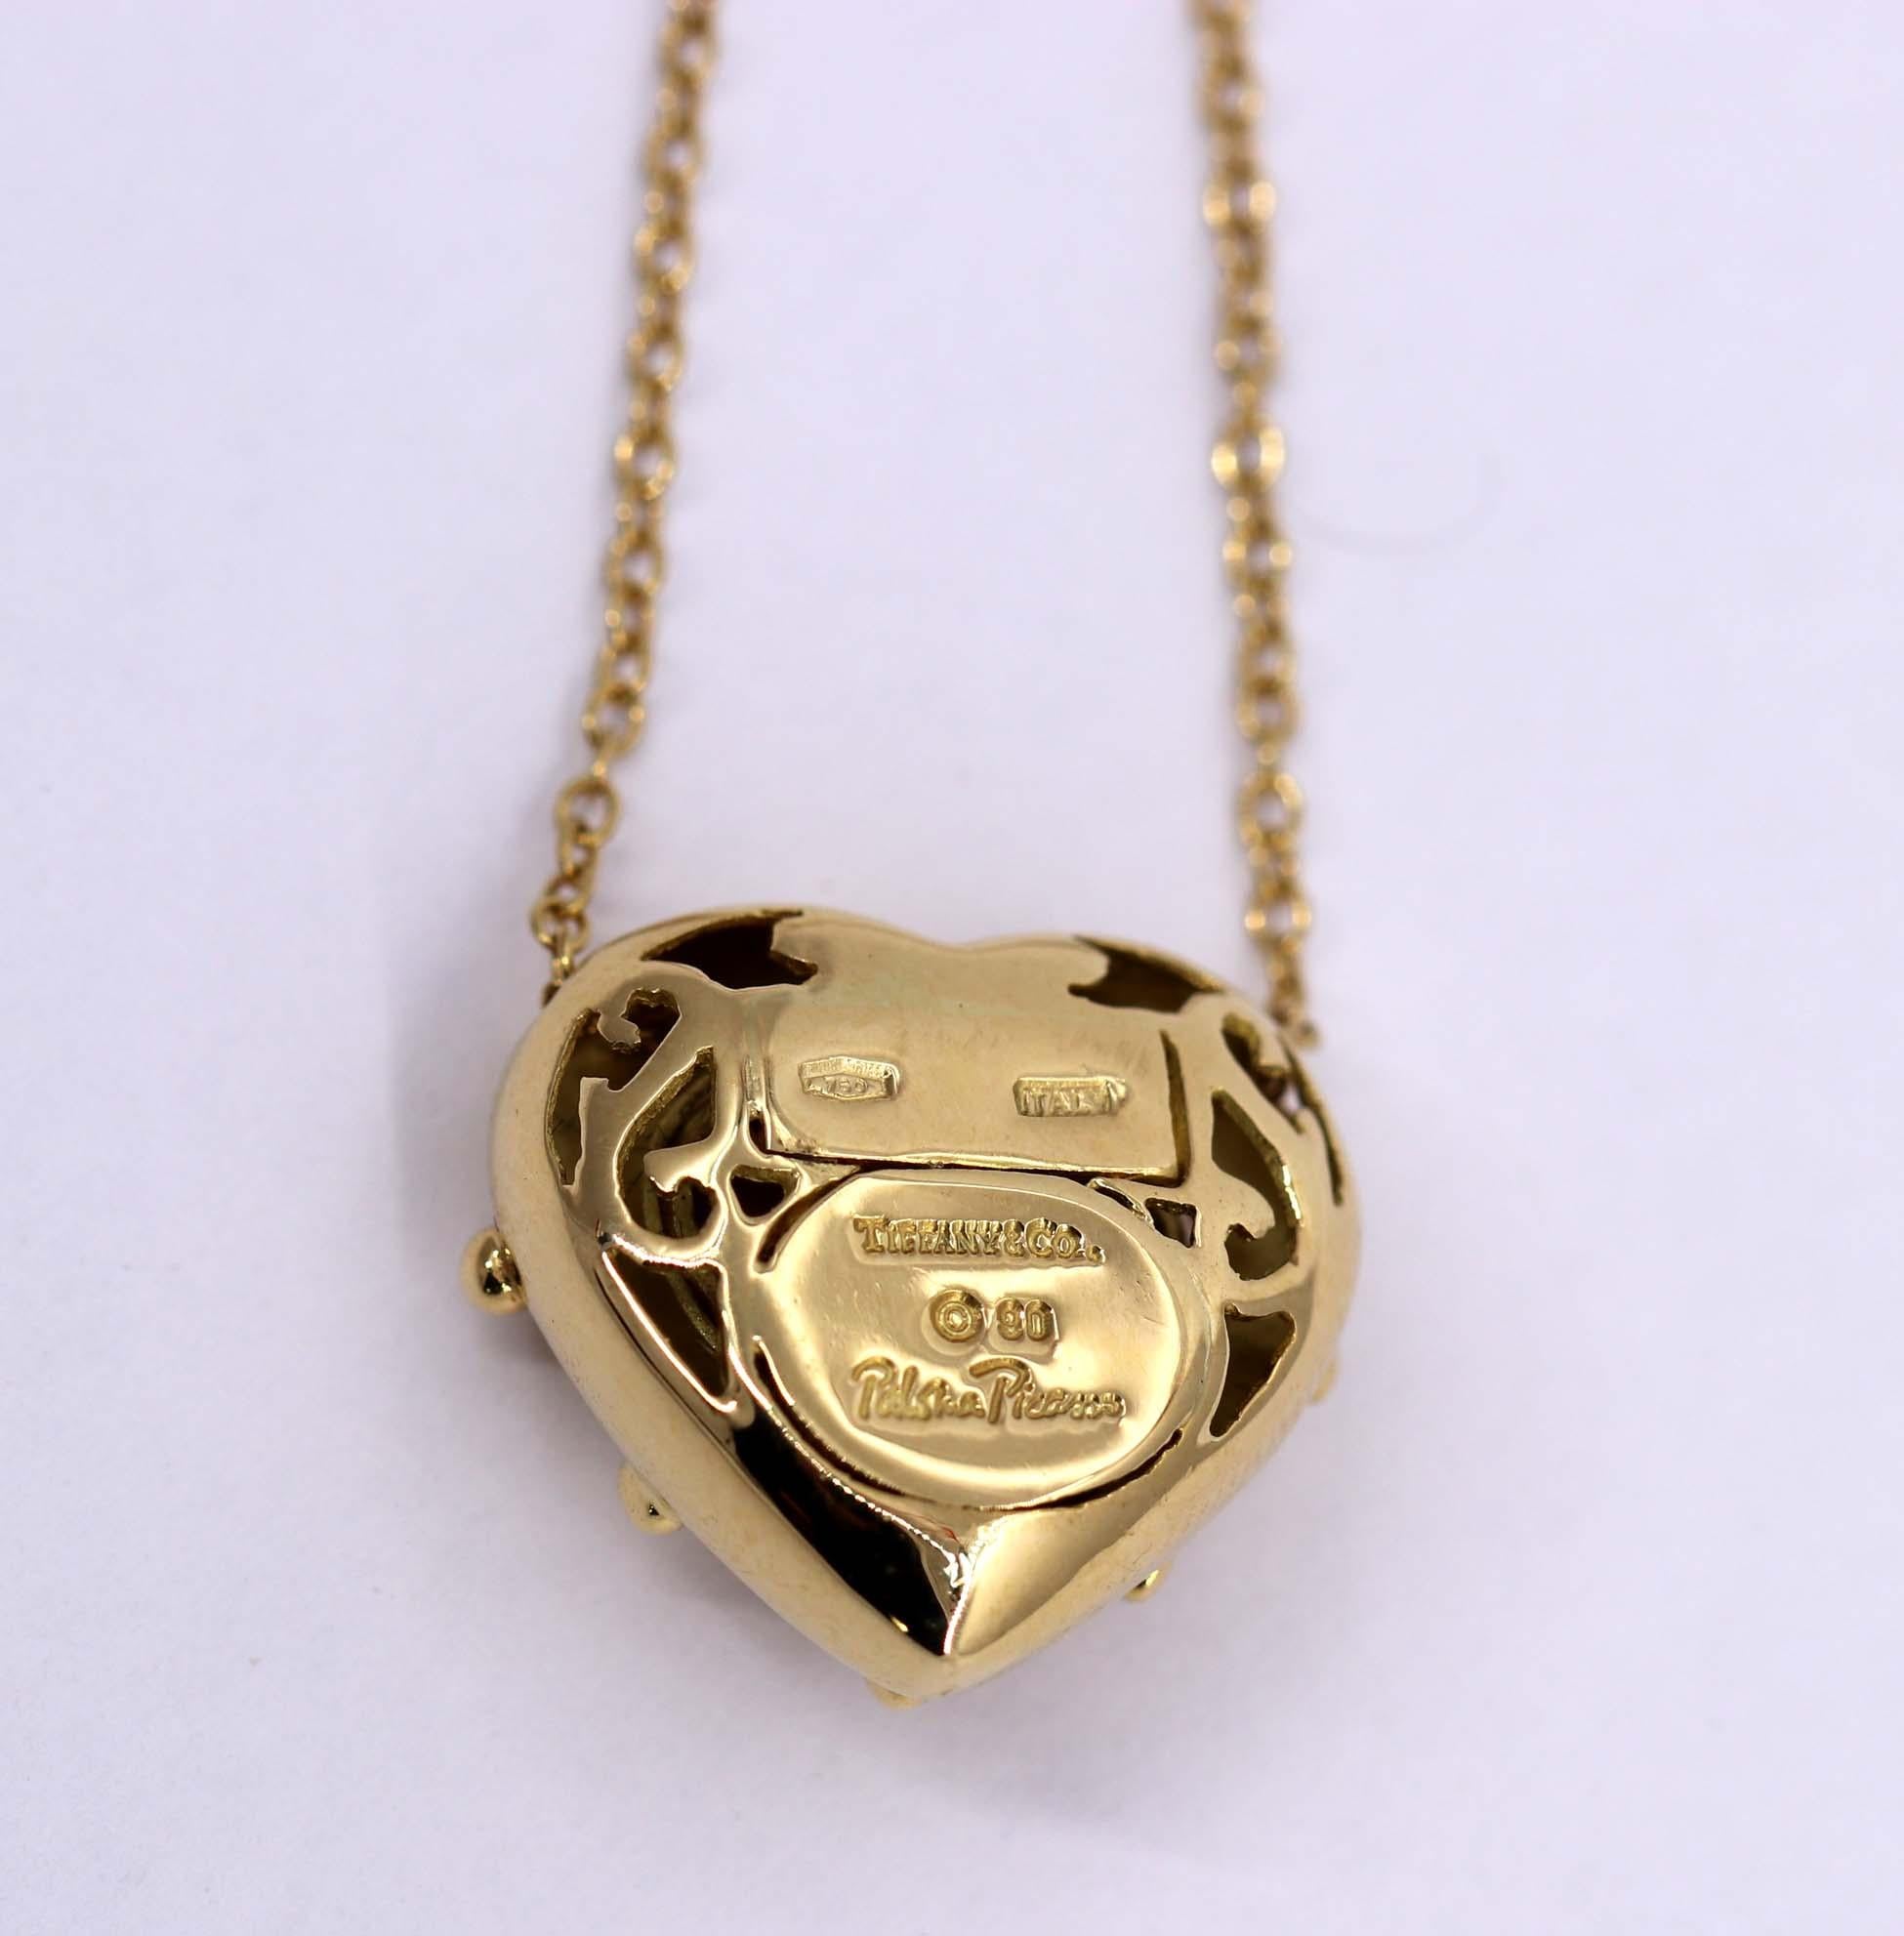 Women's Tiffany & Co. Puffed Heart Pendant on Gold Chain